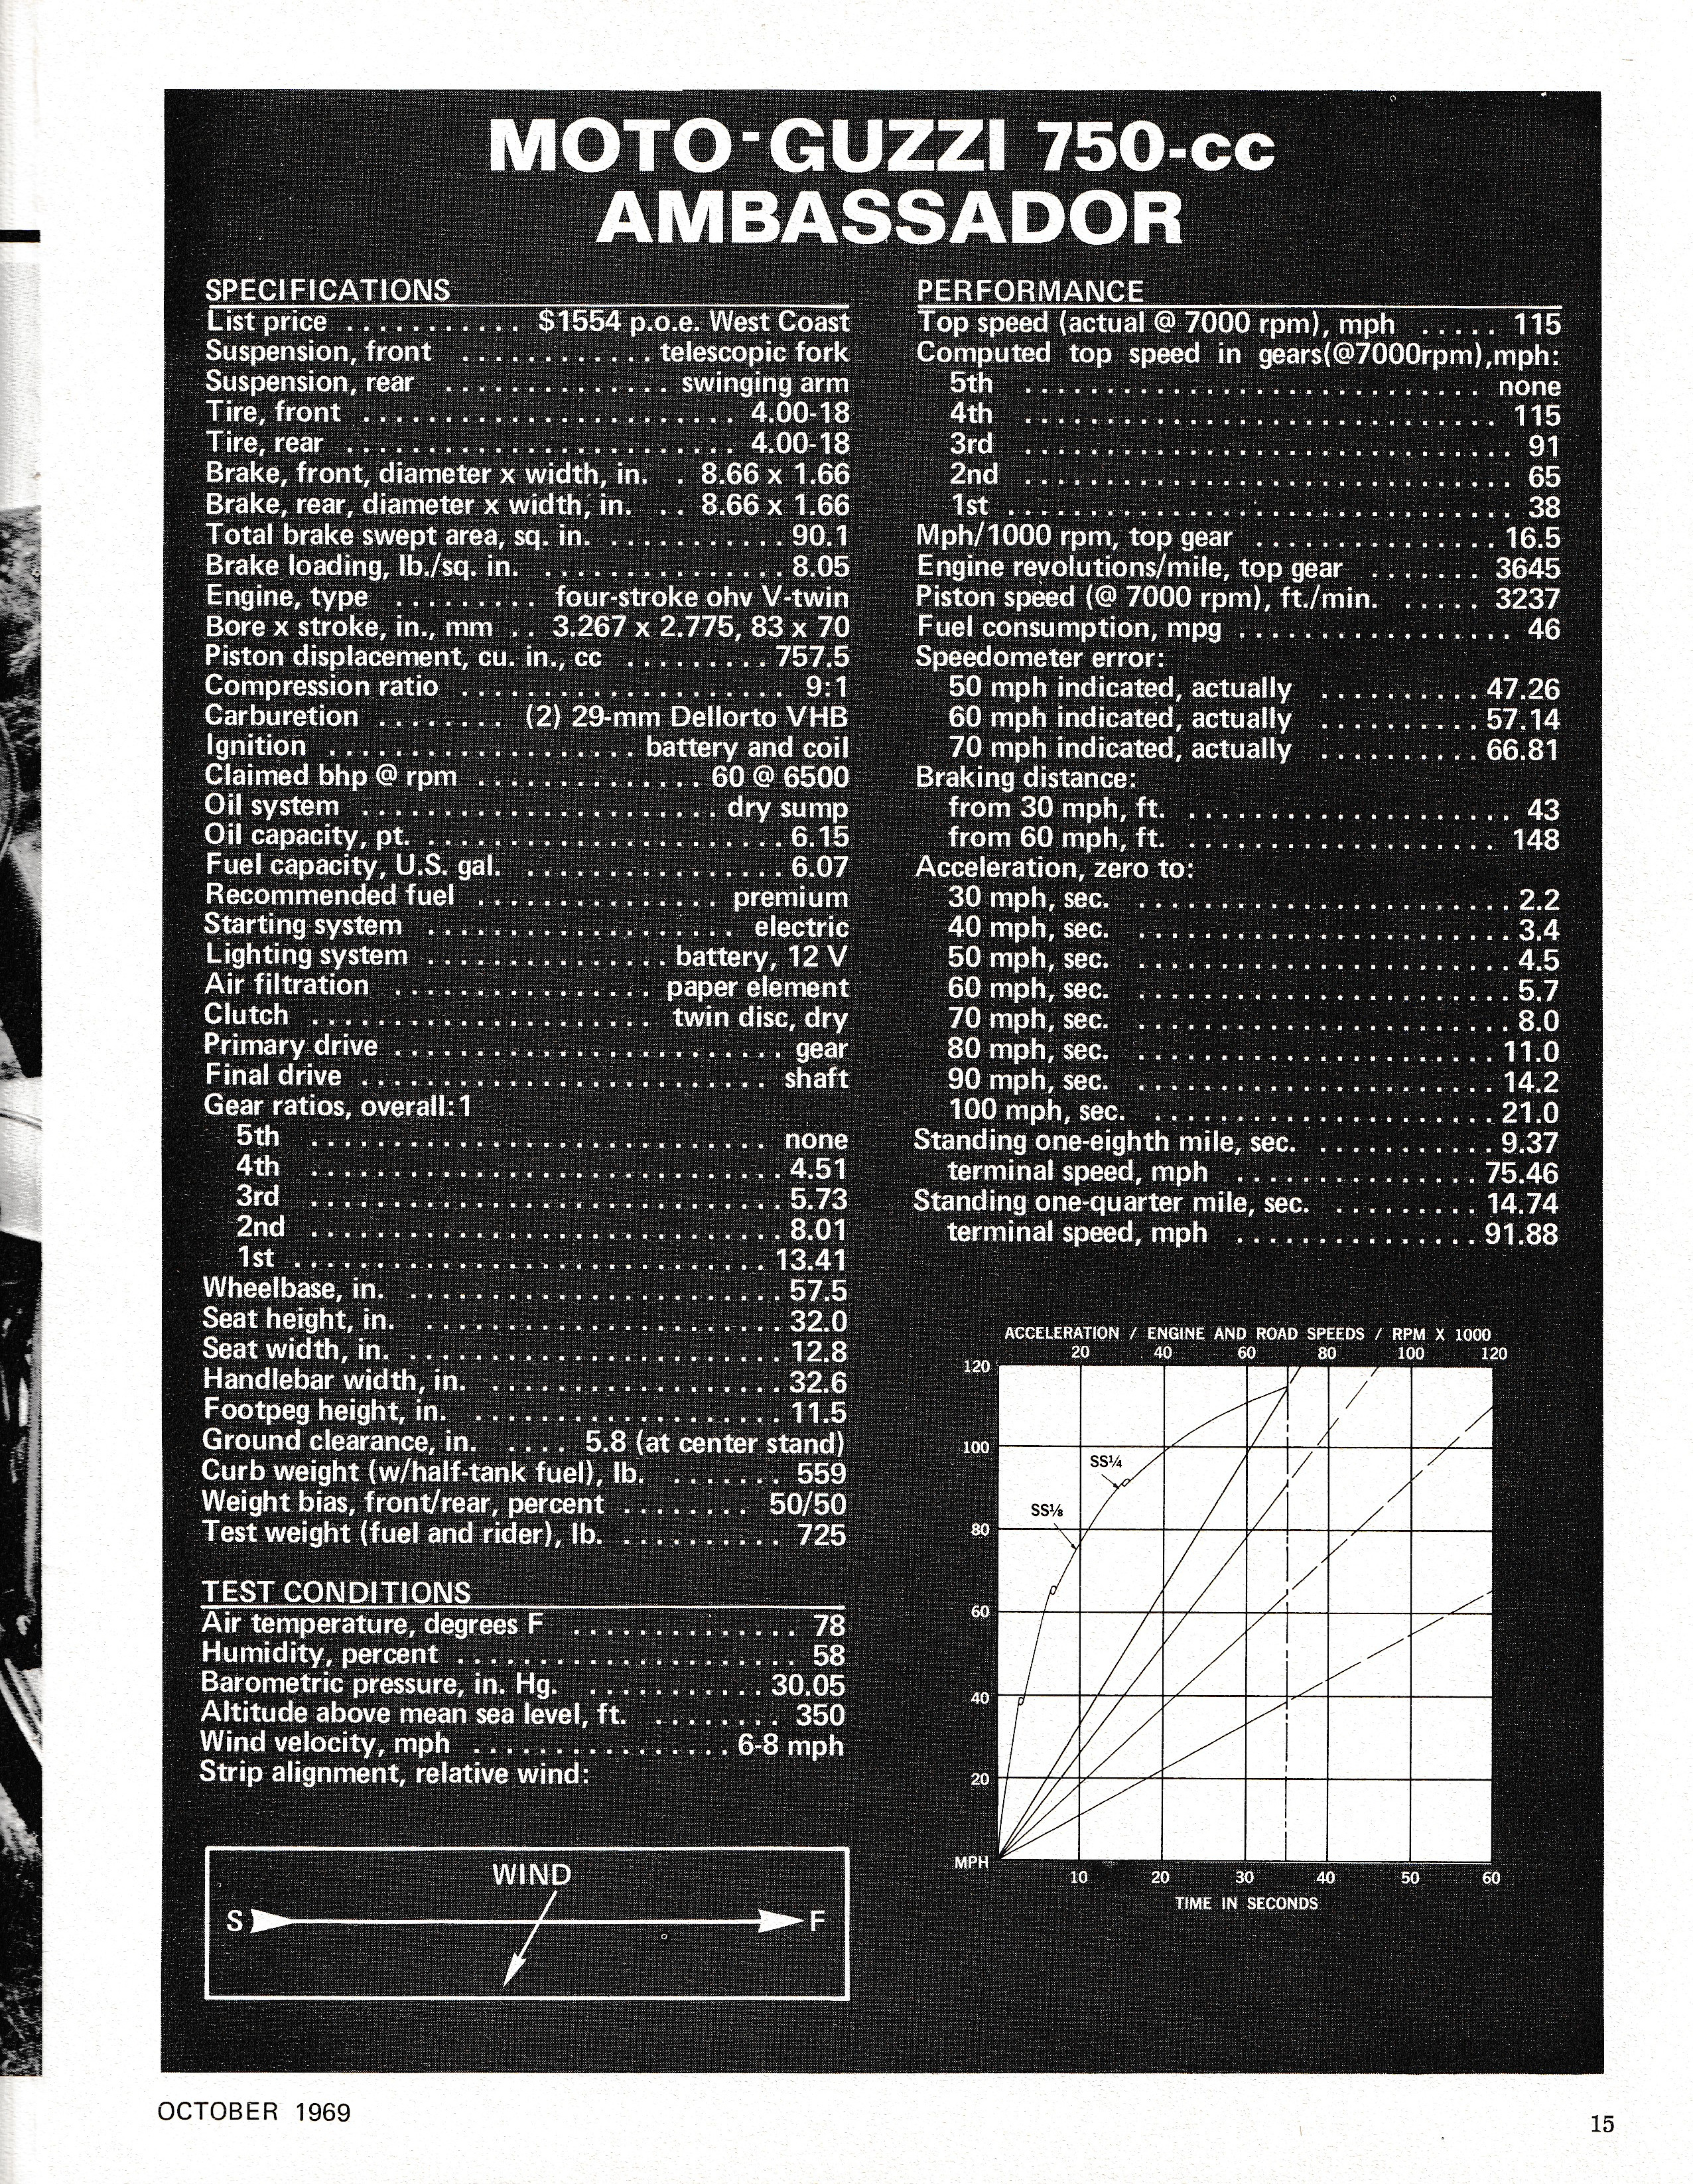 Moto Guzzi Ambassador factory brochure of magazine reviews, Page 15 of 16.